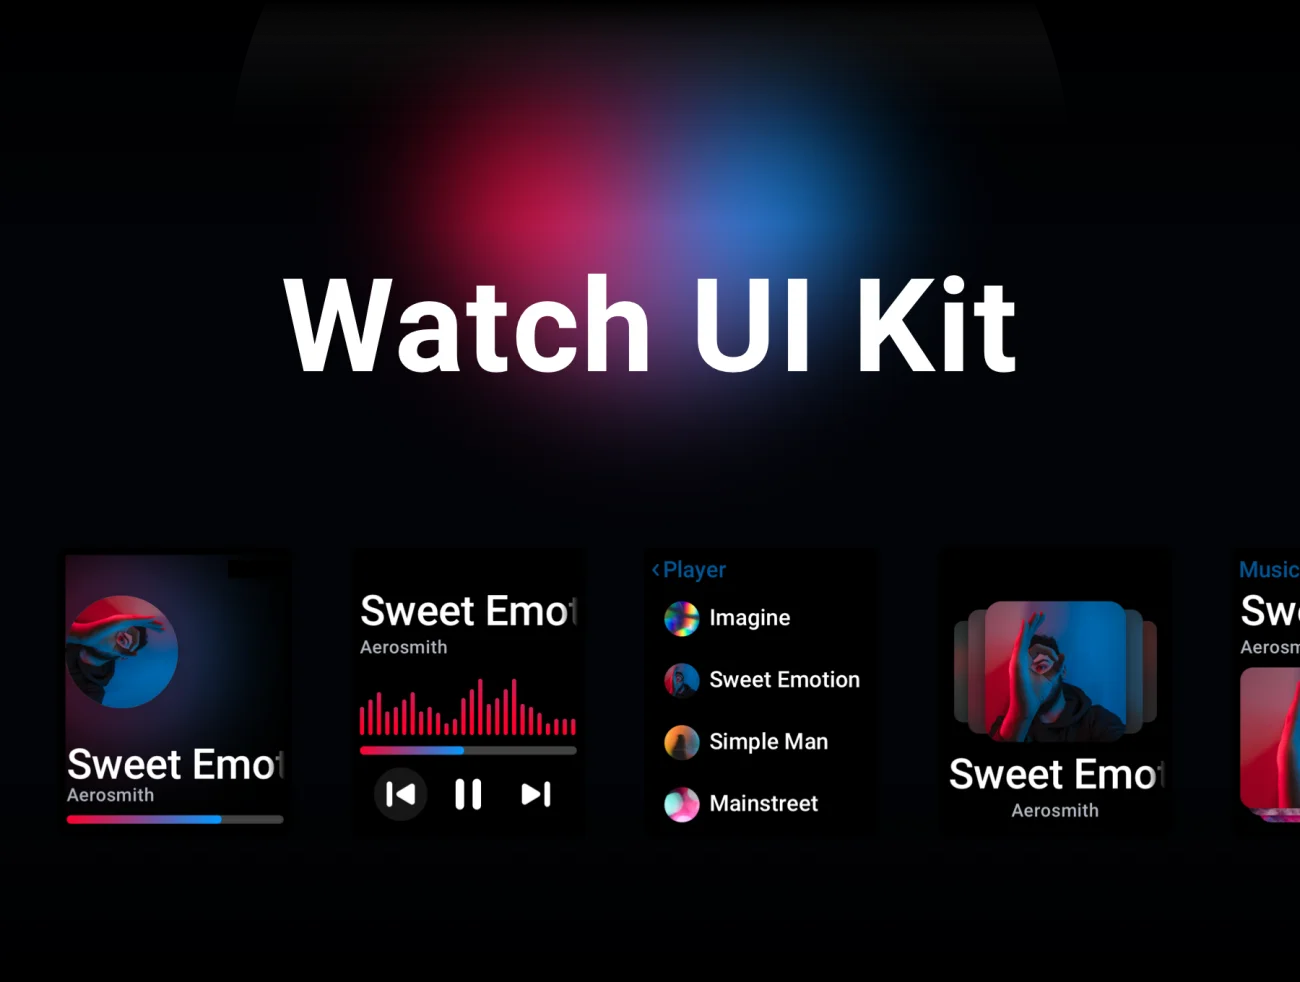 Watch UI Kit 深色手表应用UI套件-UI/UX、ui套件、主页、介绍、列表、卡片式、应用、引导页、播放器、数据可视化-仪表板、社交、聊天、表单-到位啦UI